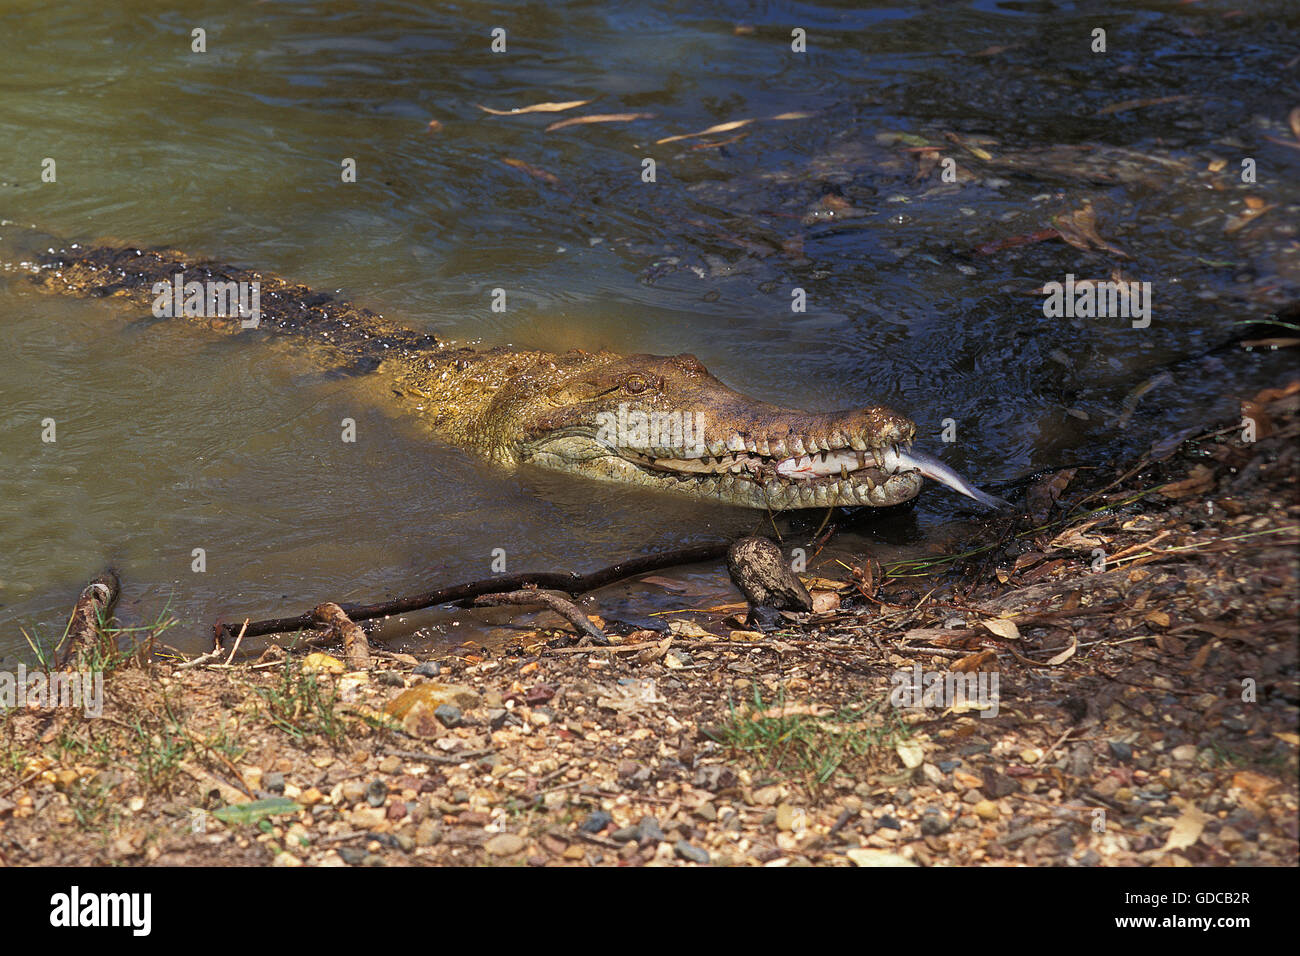 El cocodrilo de agua dulce australiano, Crocodylus johnstoni, Adulto comiendo pescado, Australia Foto de stock